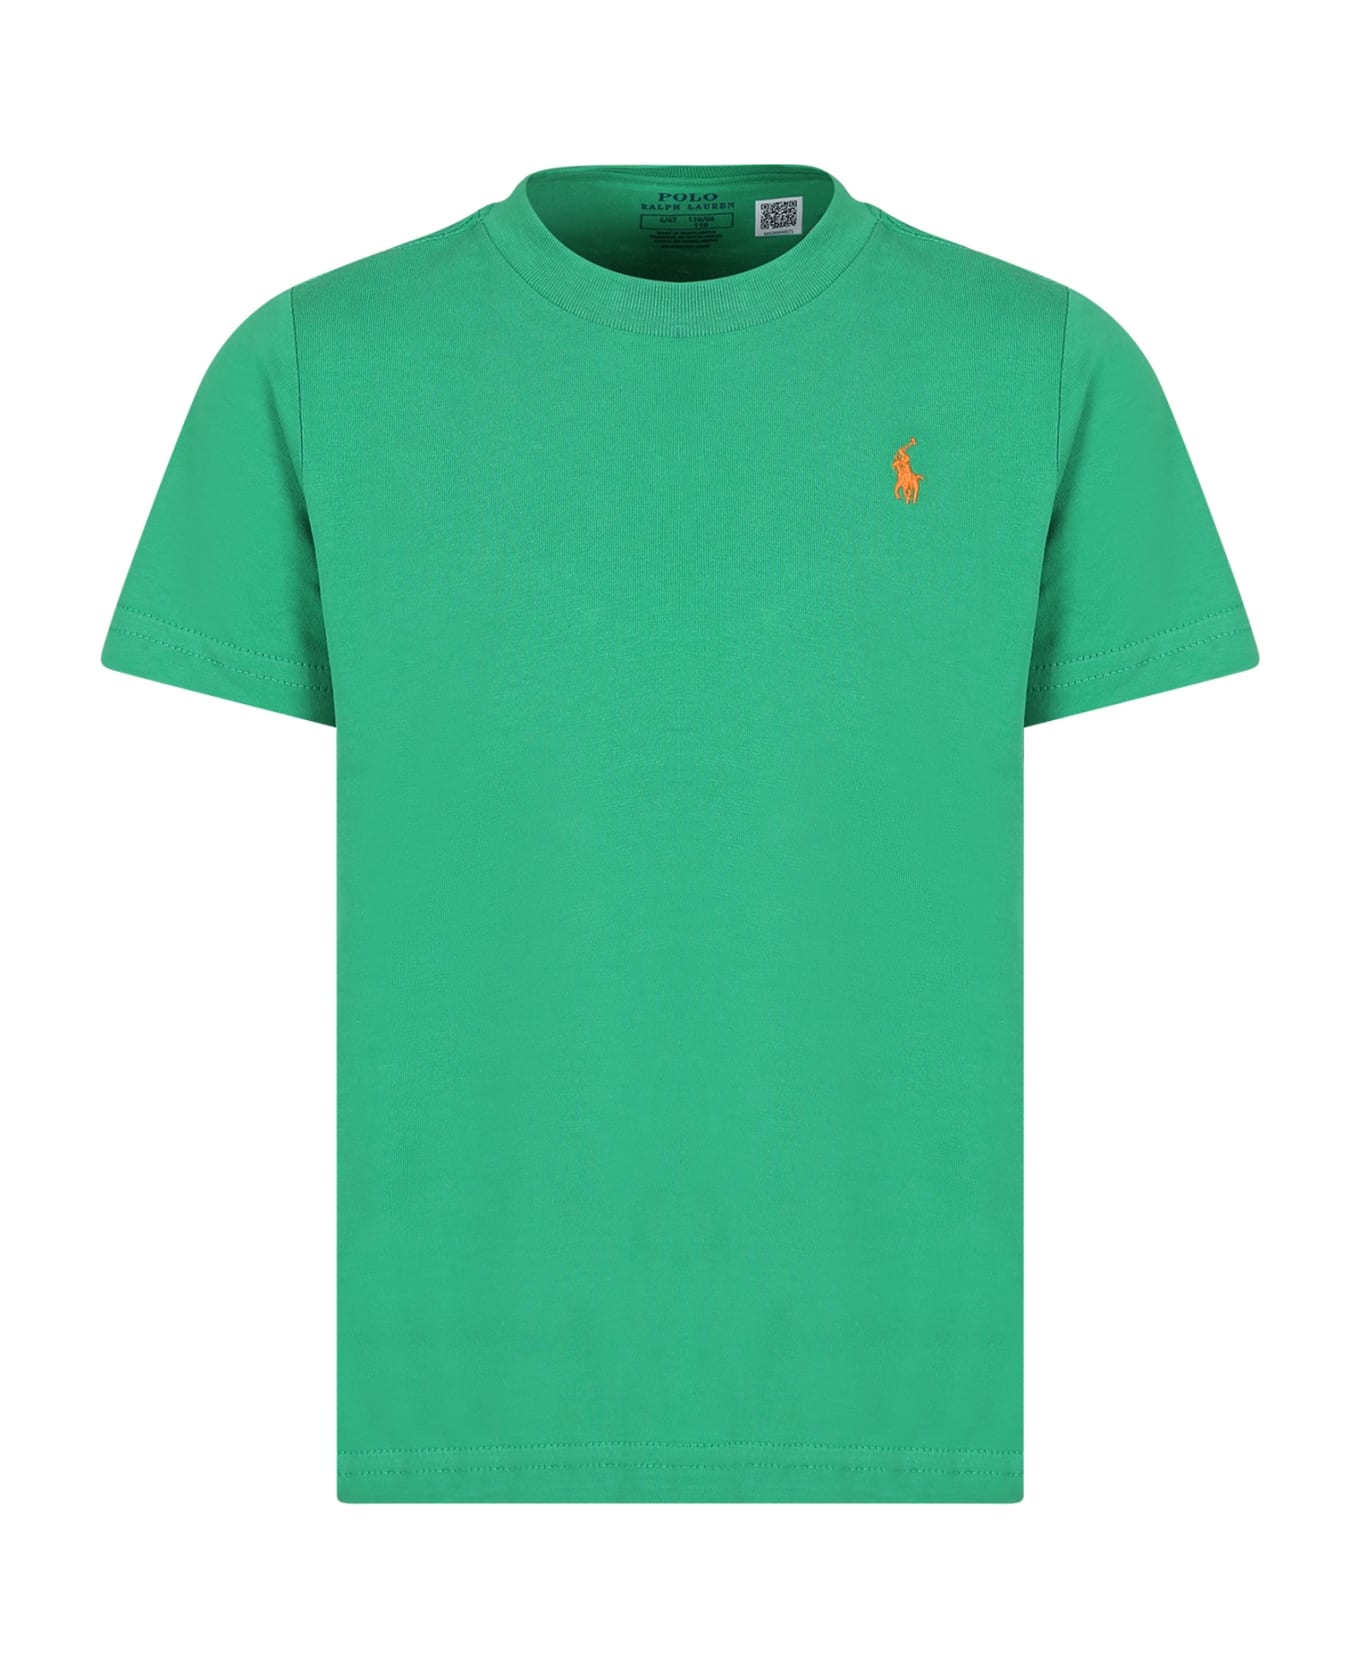 Ralph Lauren Green T-shirt For Boy With Pony - Green